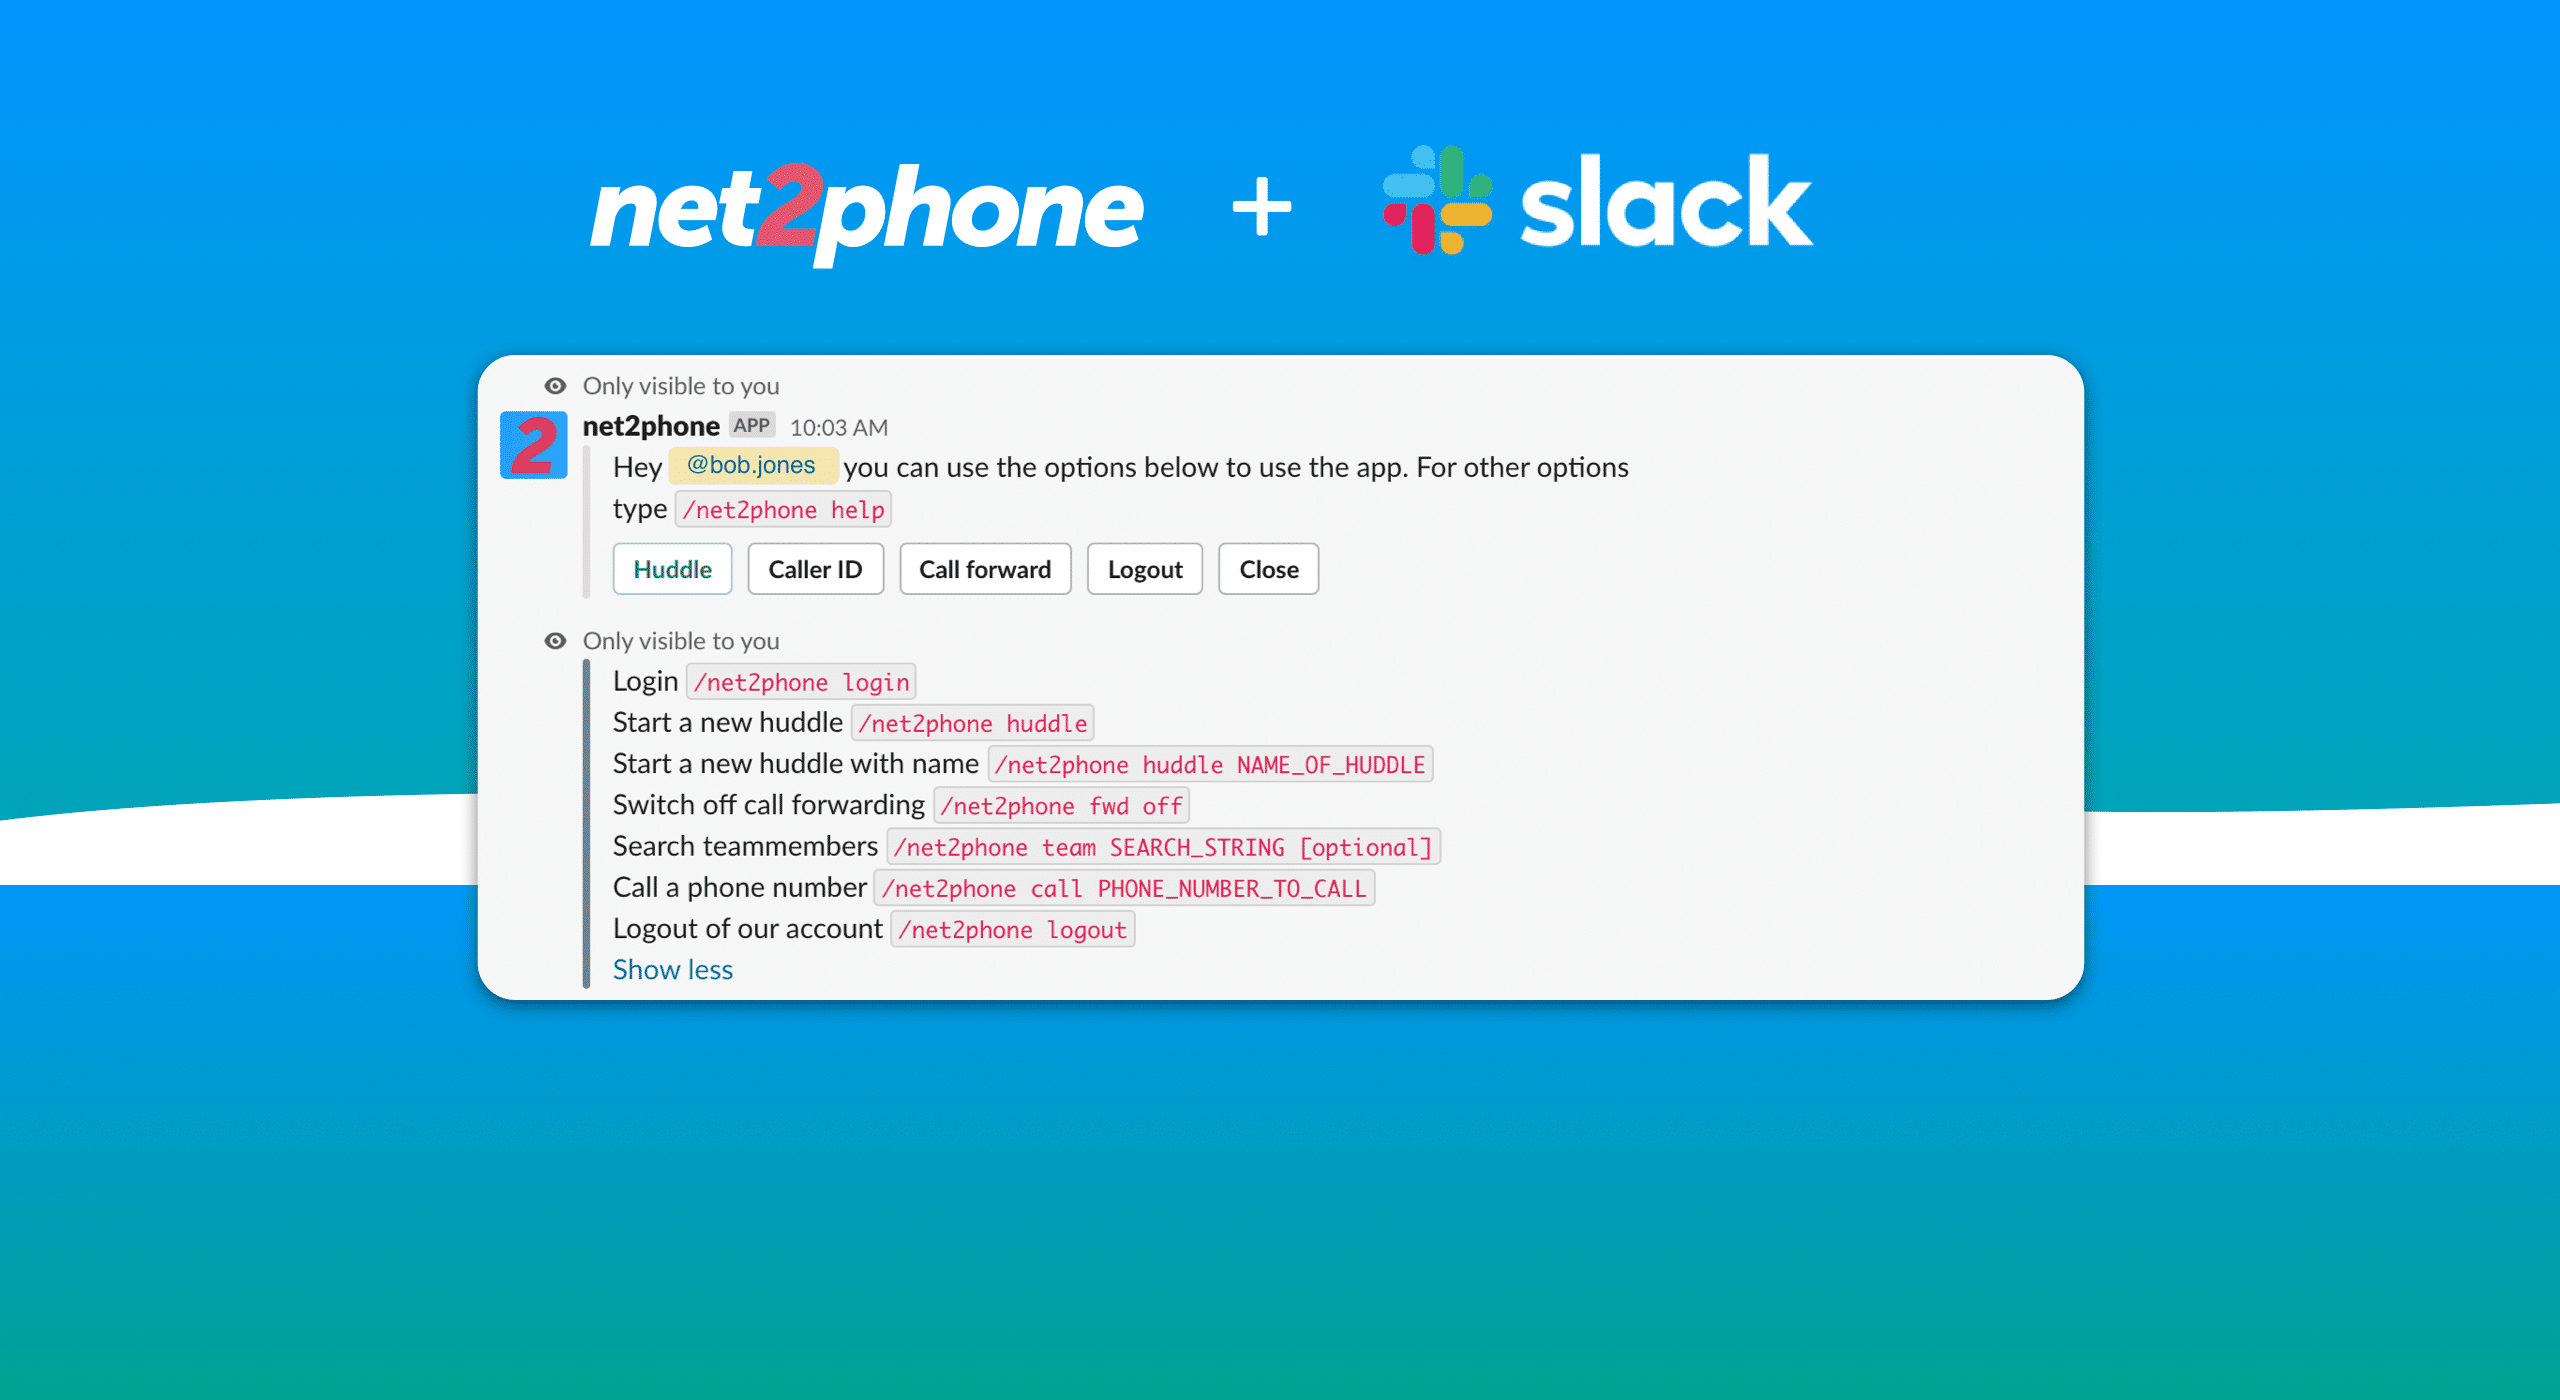 net2phone and slack